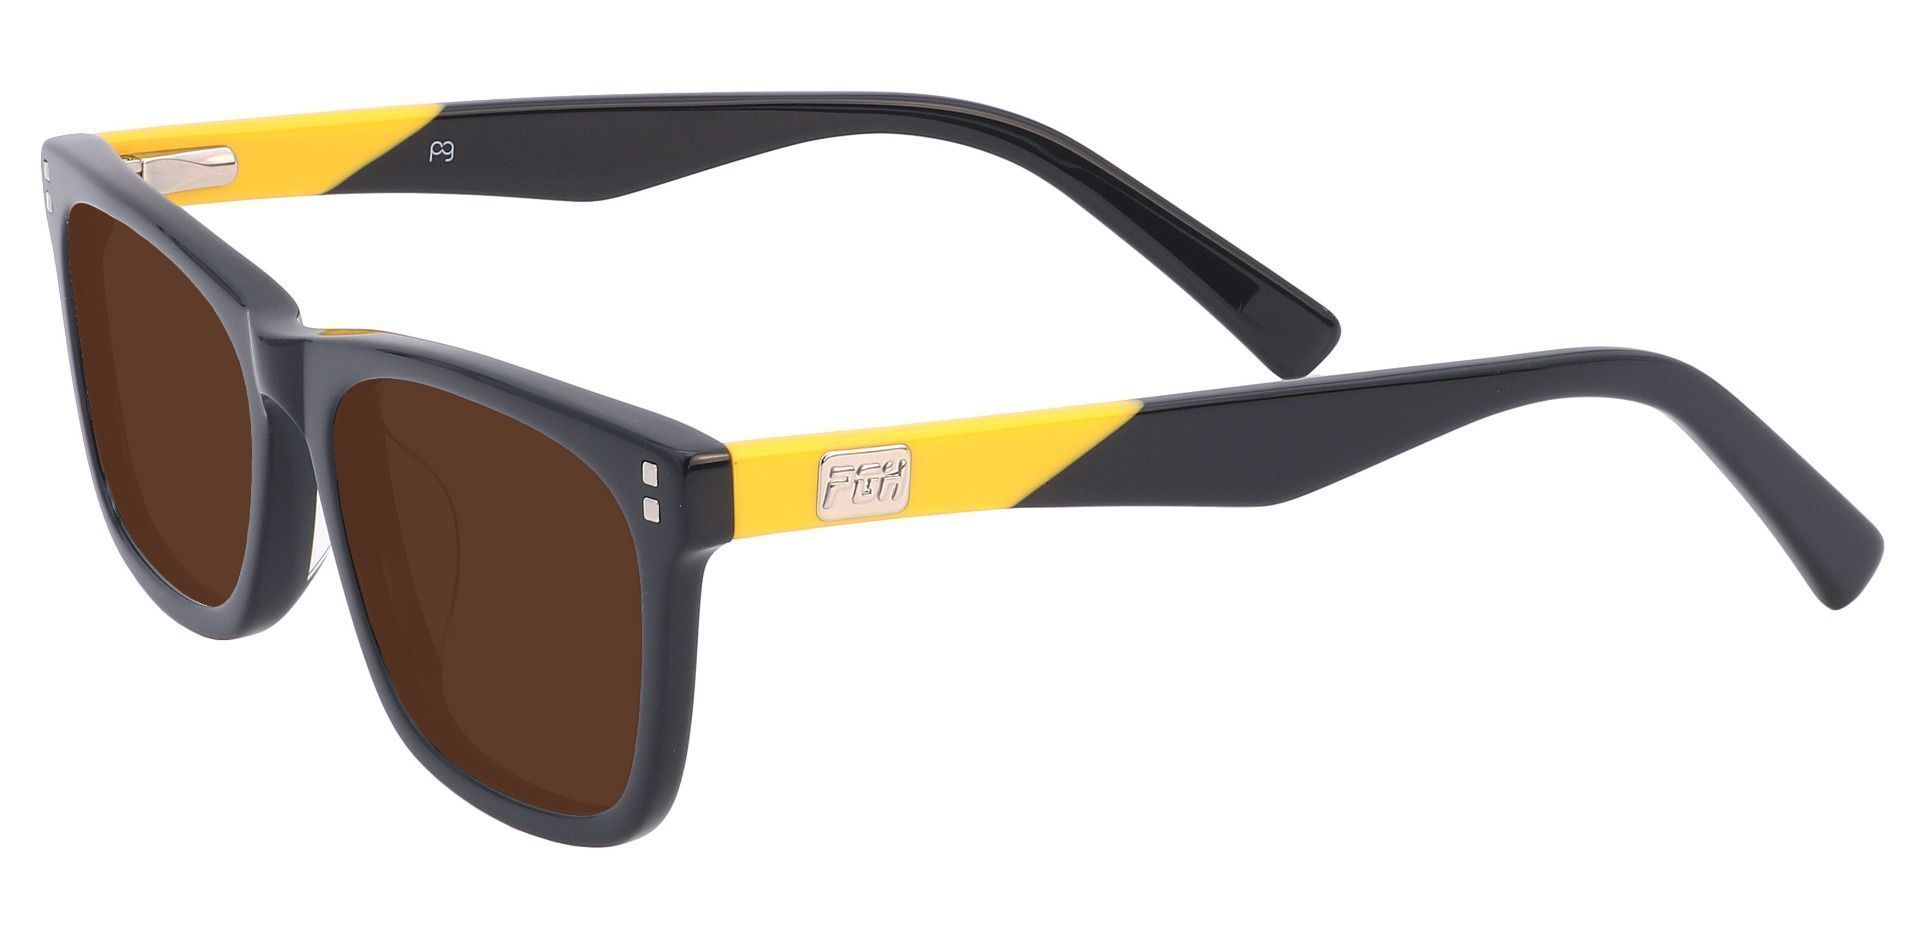 Blitz Rectangle Reading Sunglasses - Black Frame With Brown Lenses